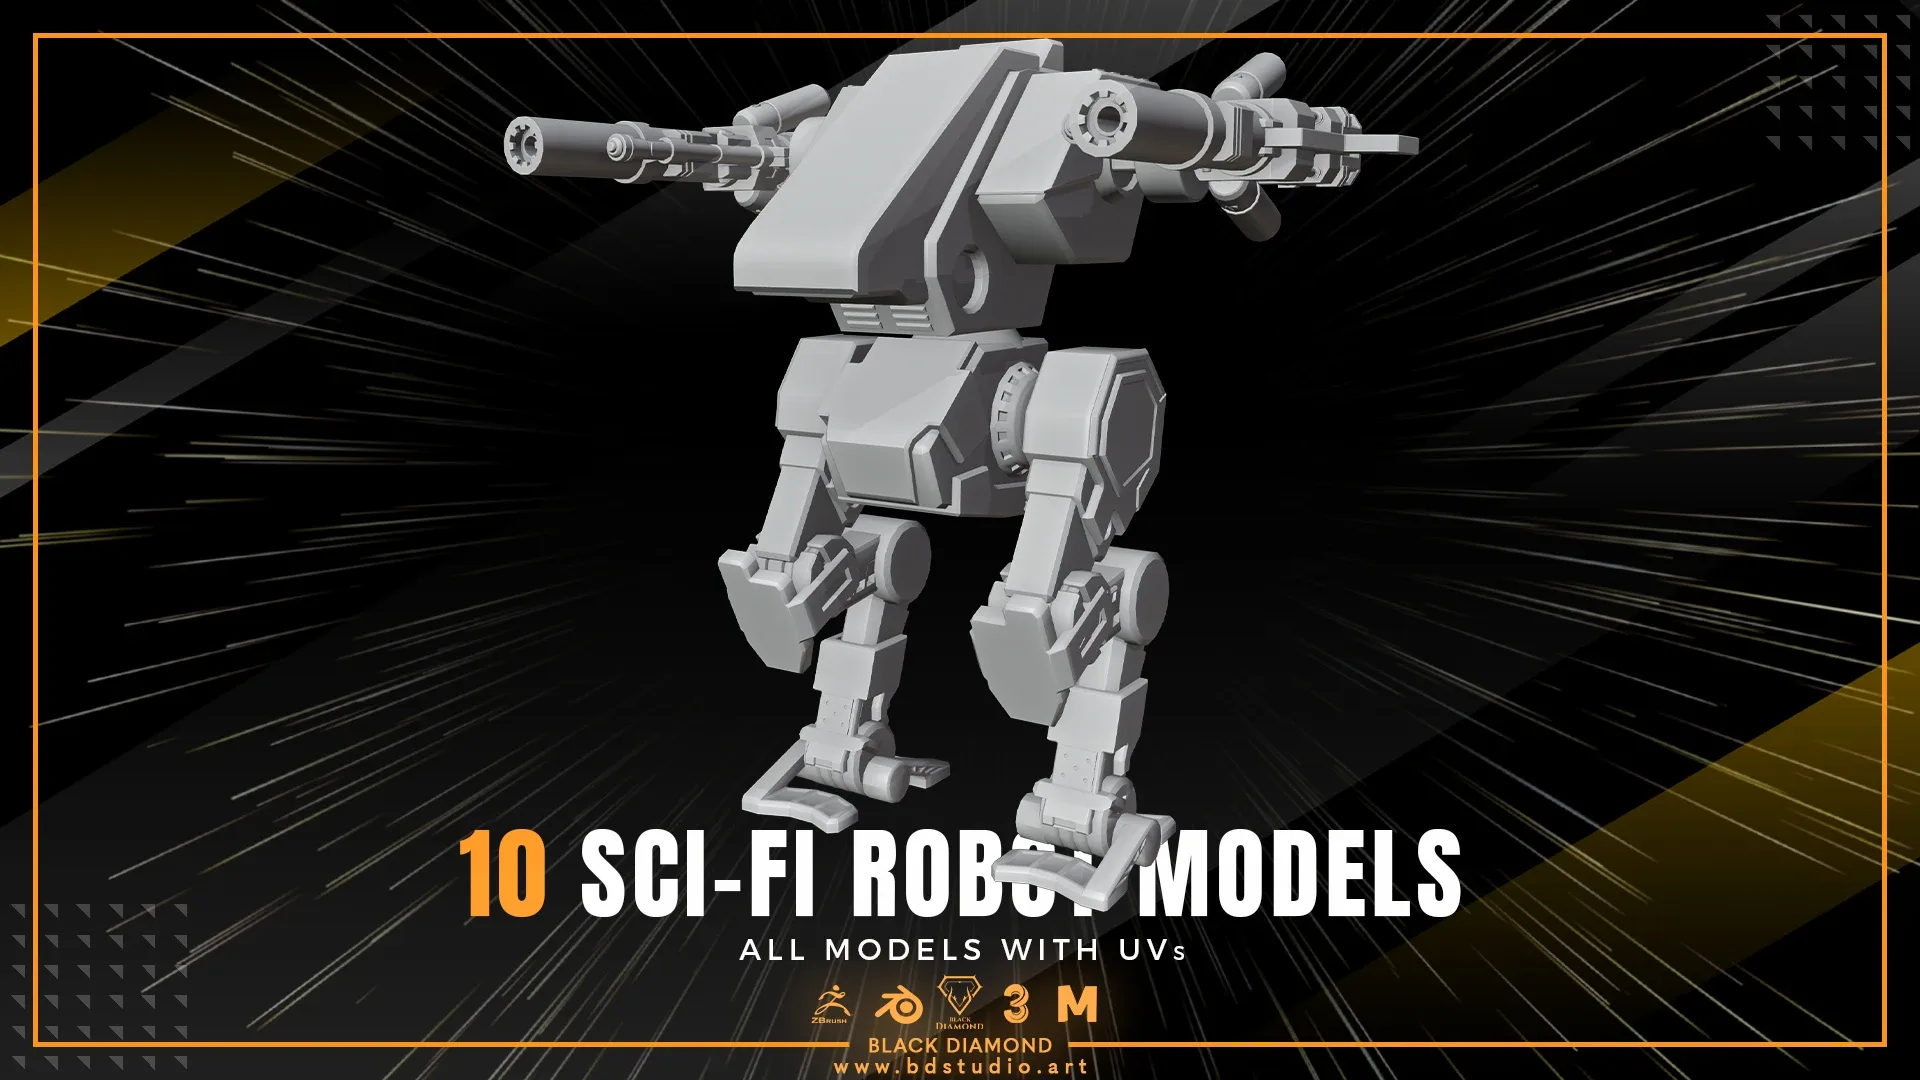 10 SCI-FI ROBOT MODELS